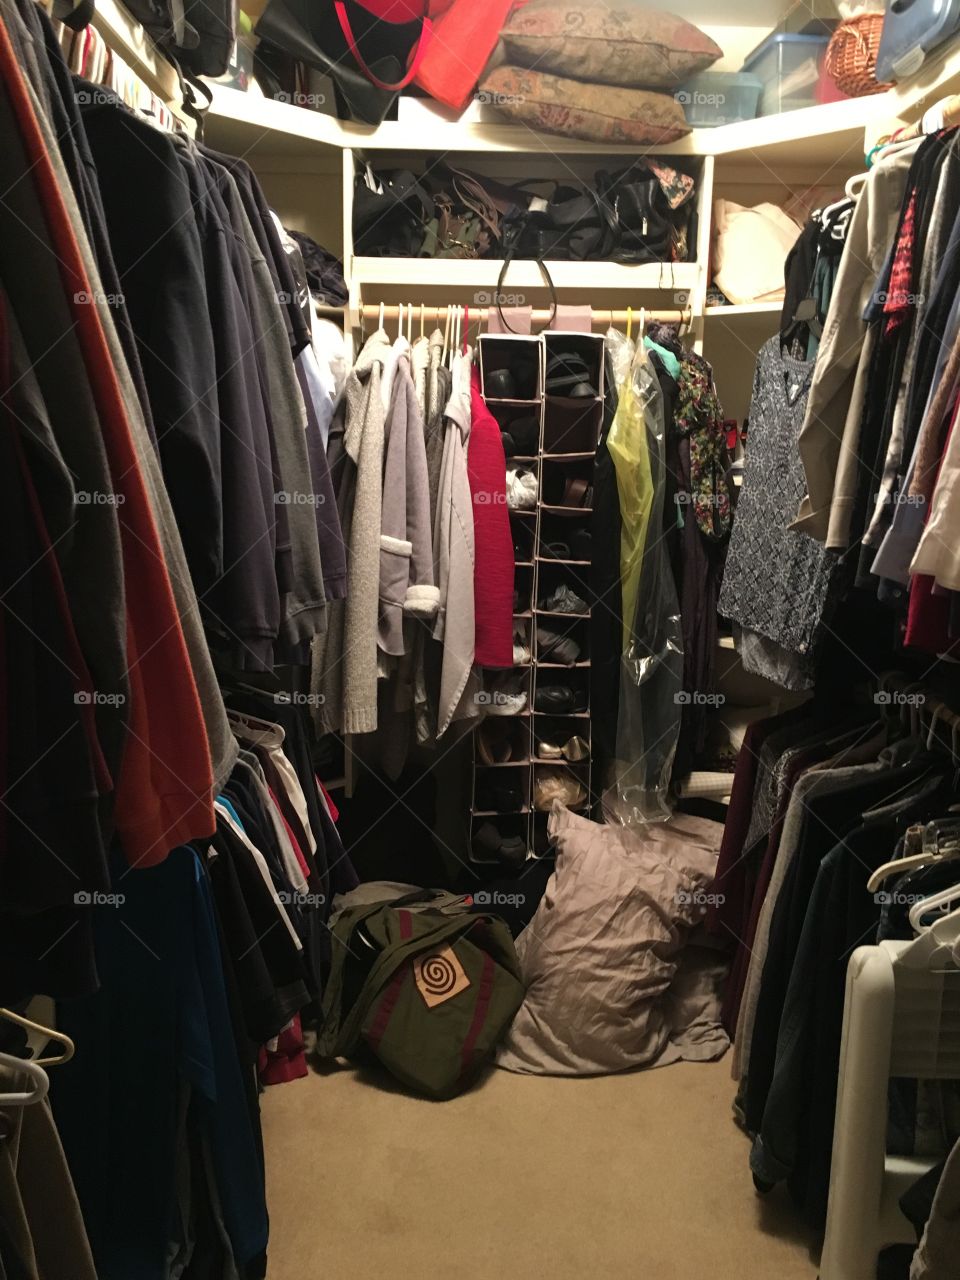 Messy closet.